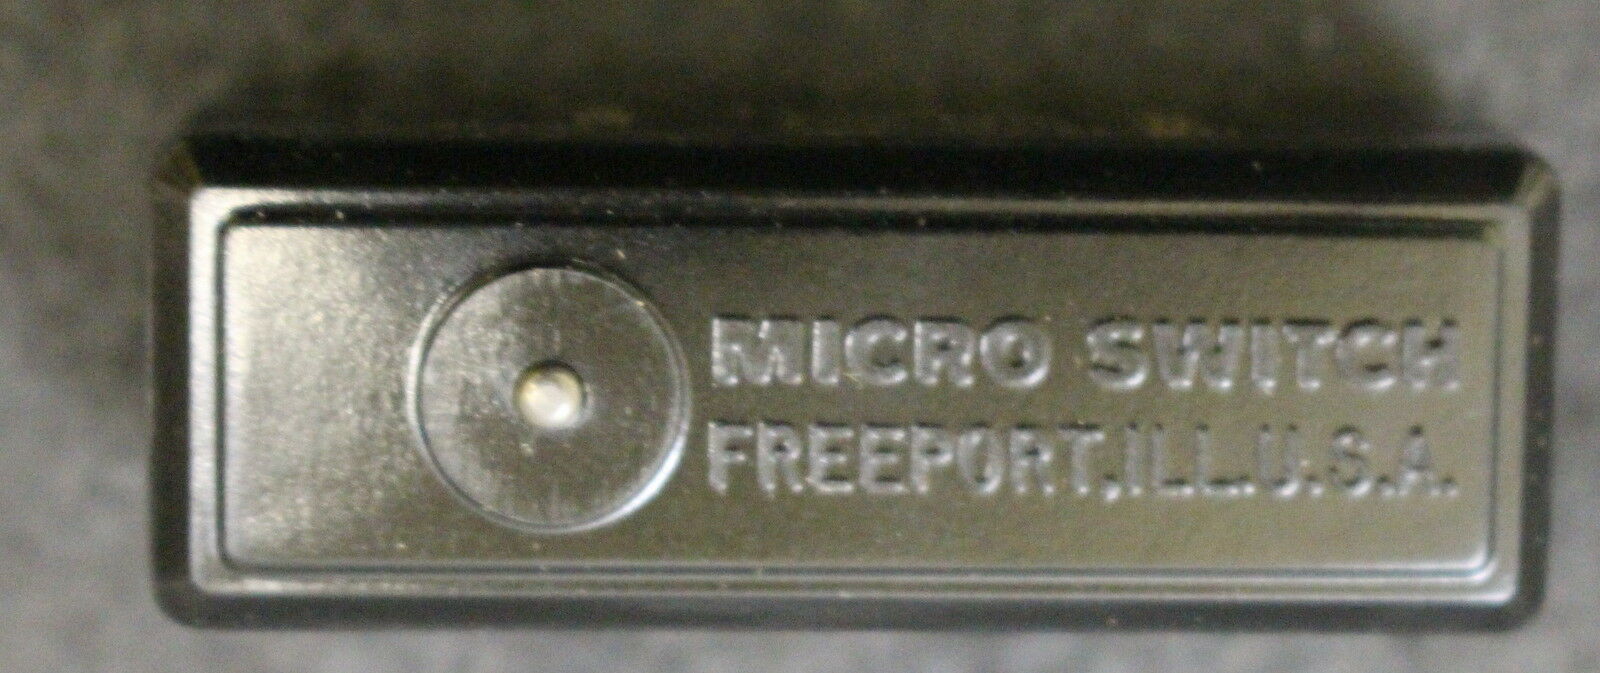 HONEYWELL Mikroschalter micro switch BZ-R 9828 - 125-480VAC - 15A - 250VAC